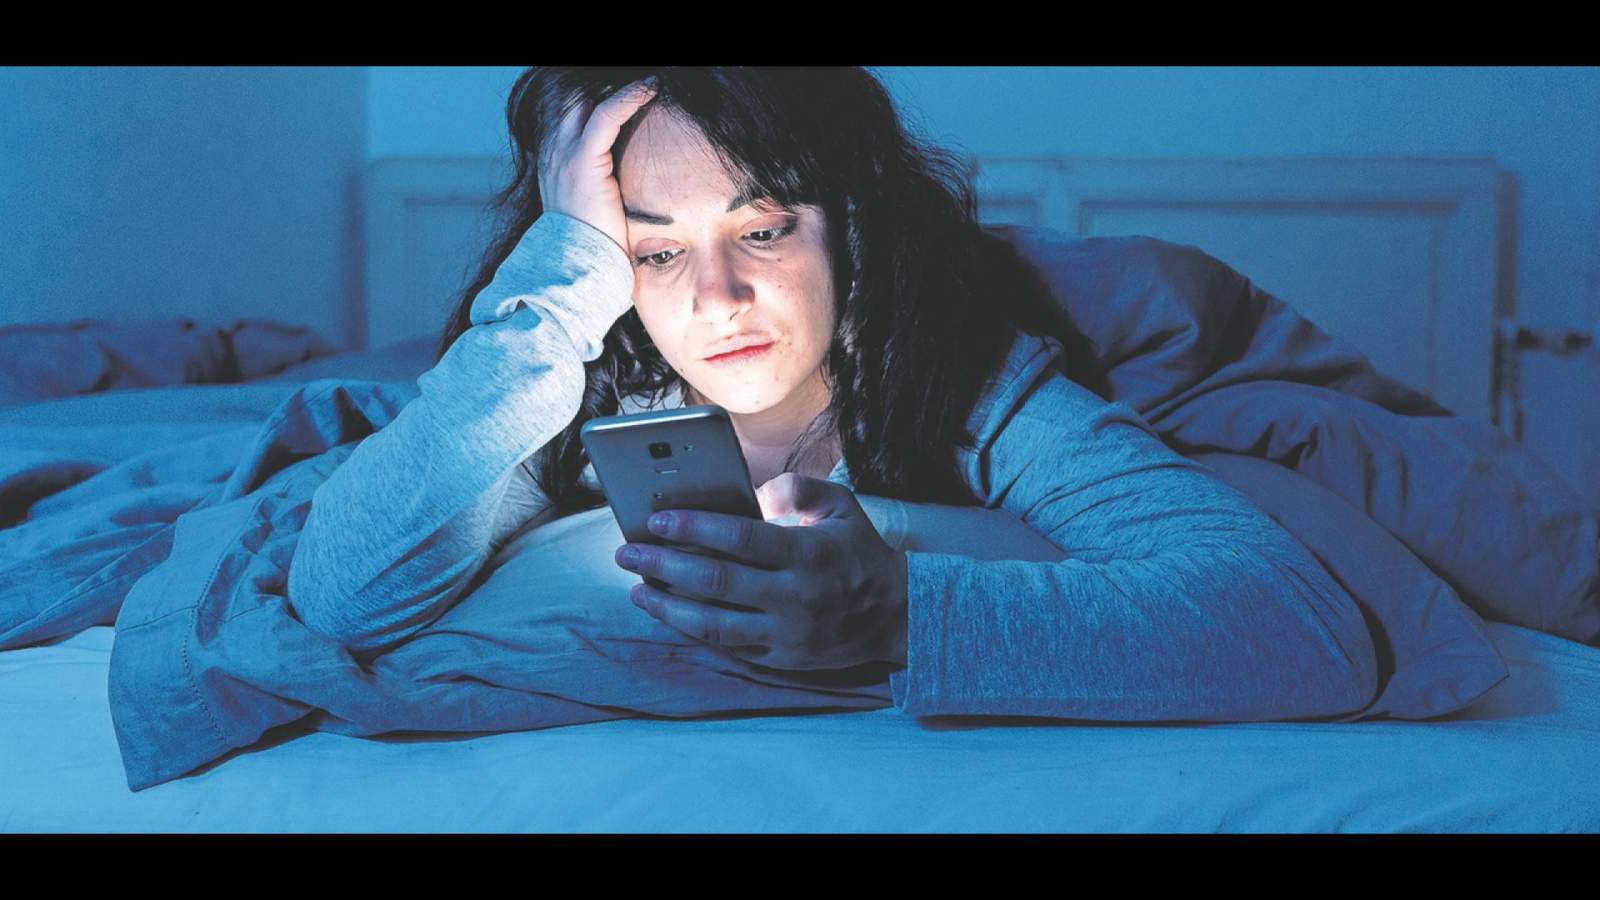 Social media triggers may contribute to compulsive behavior online, San Antonio mental health advocates say